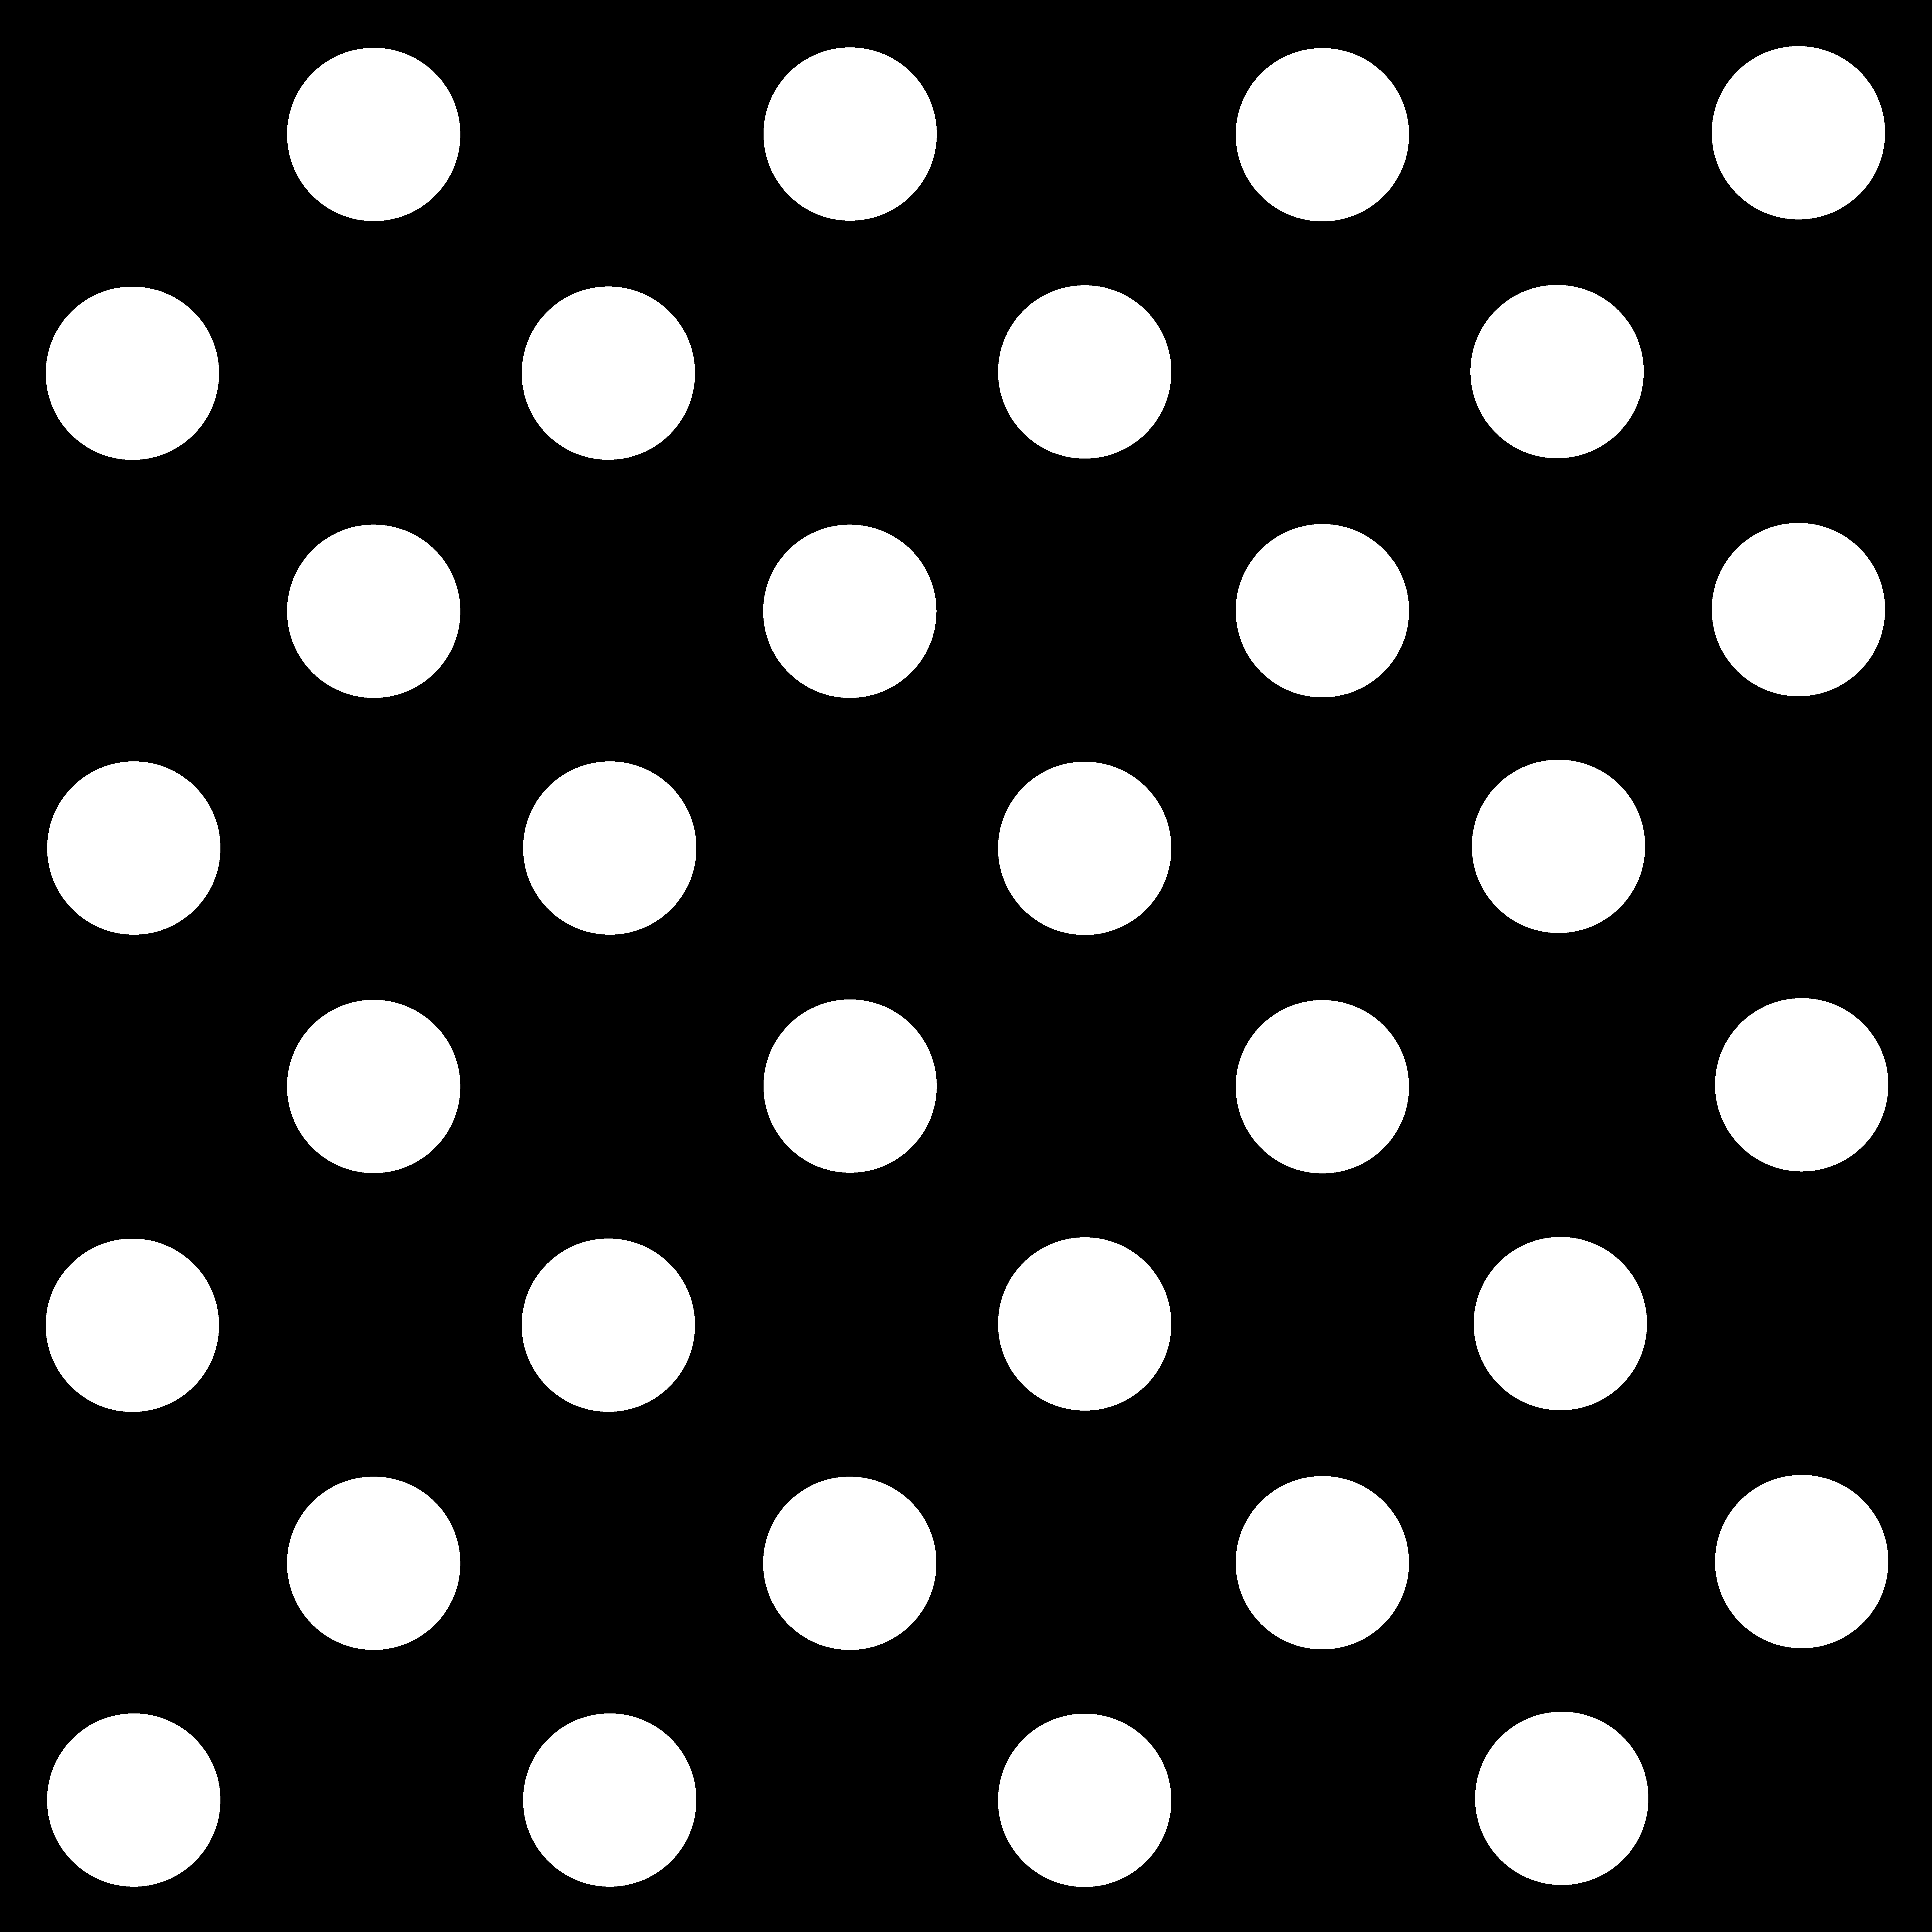 Free White Polka Dots Png, Download Free White Polka Dots Png png